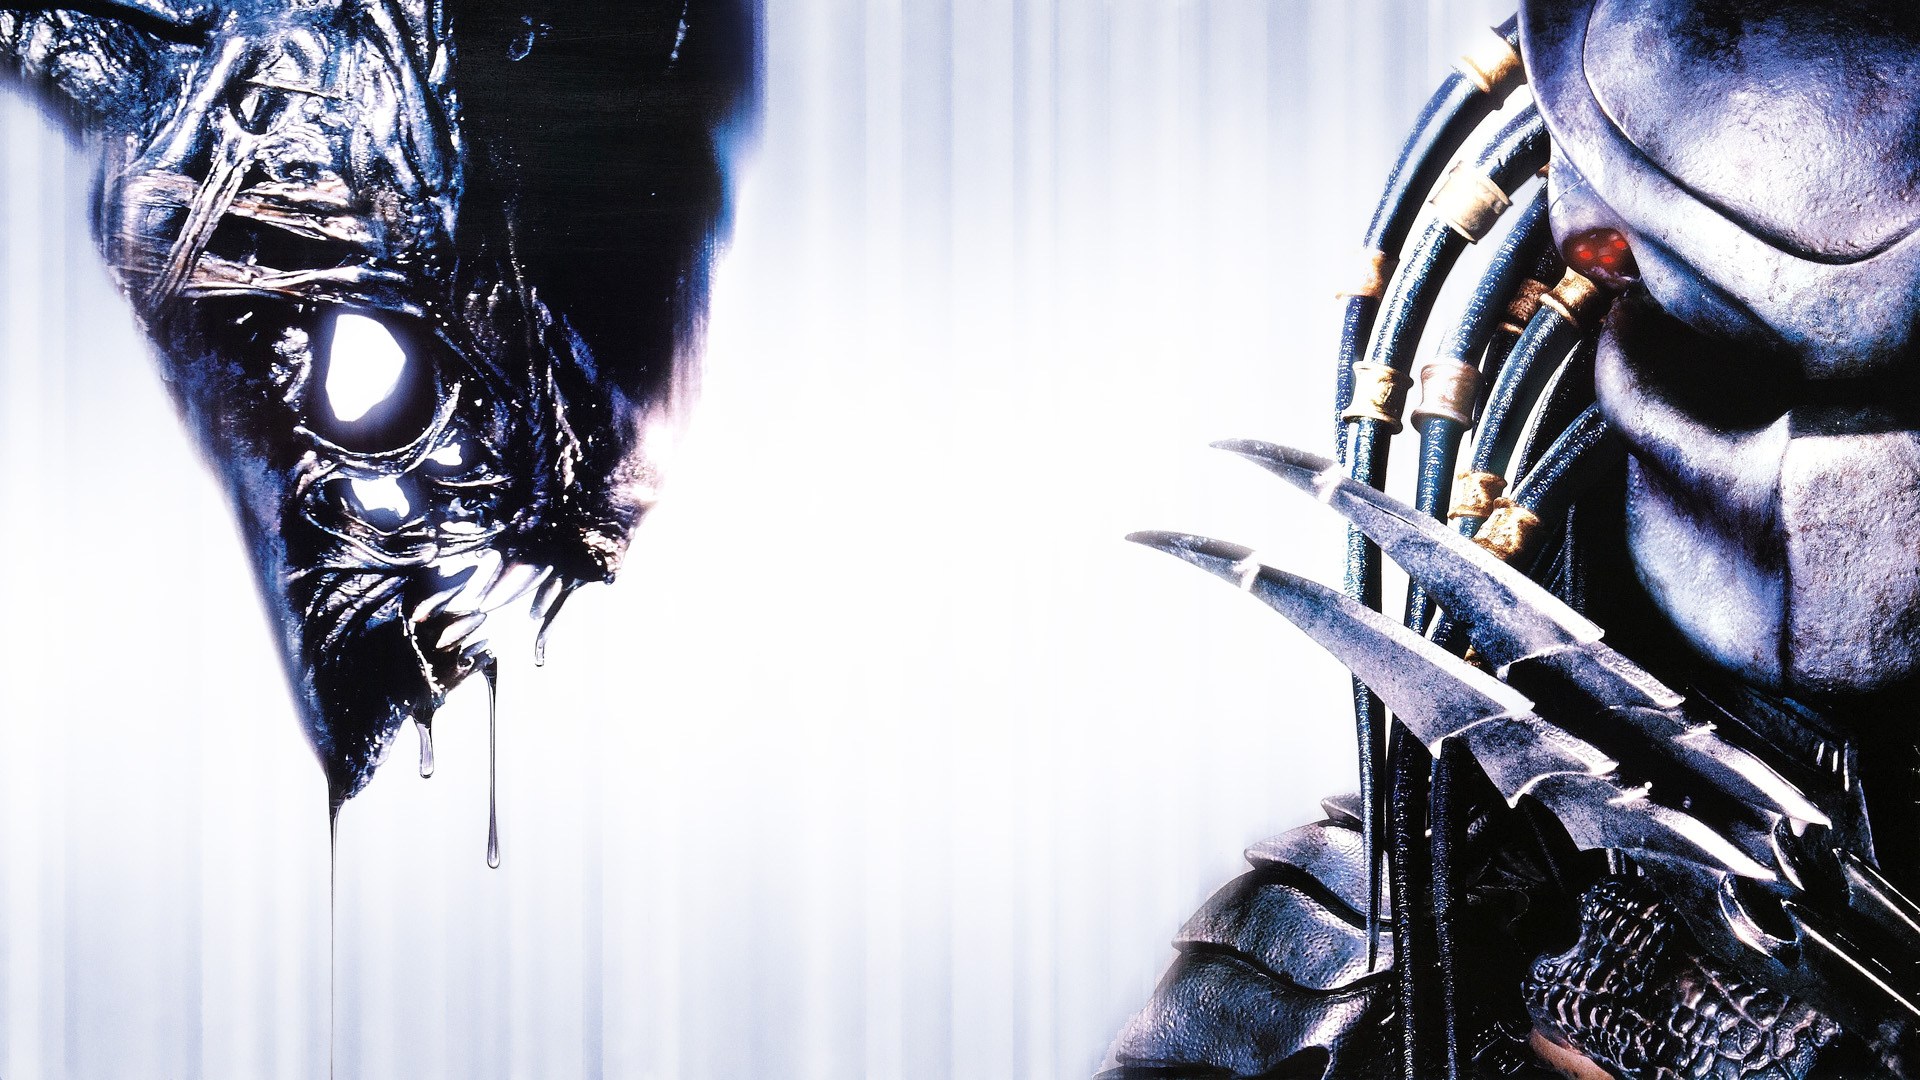 Selle nädala parim film: osta "Alien vs. Predator ", režissöör Paul W. S. Anderson, hinnaga 9,90 R $!